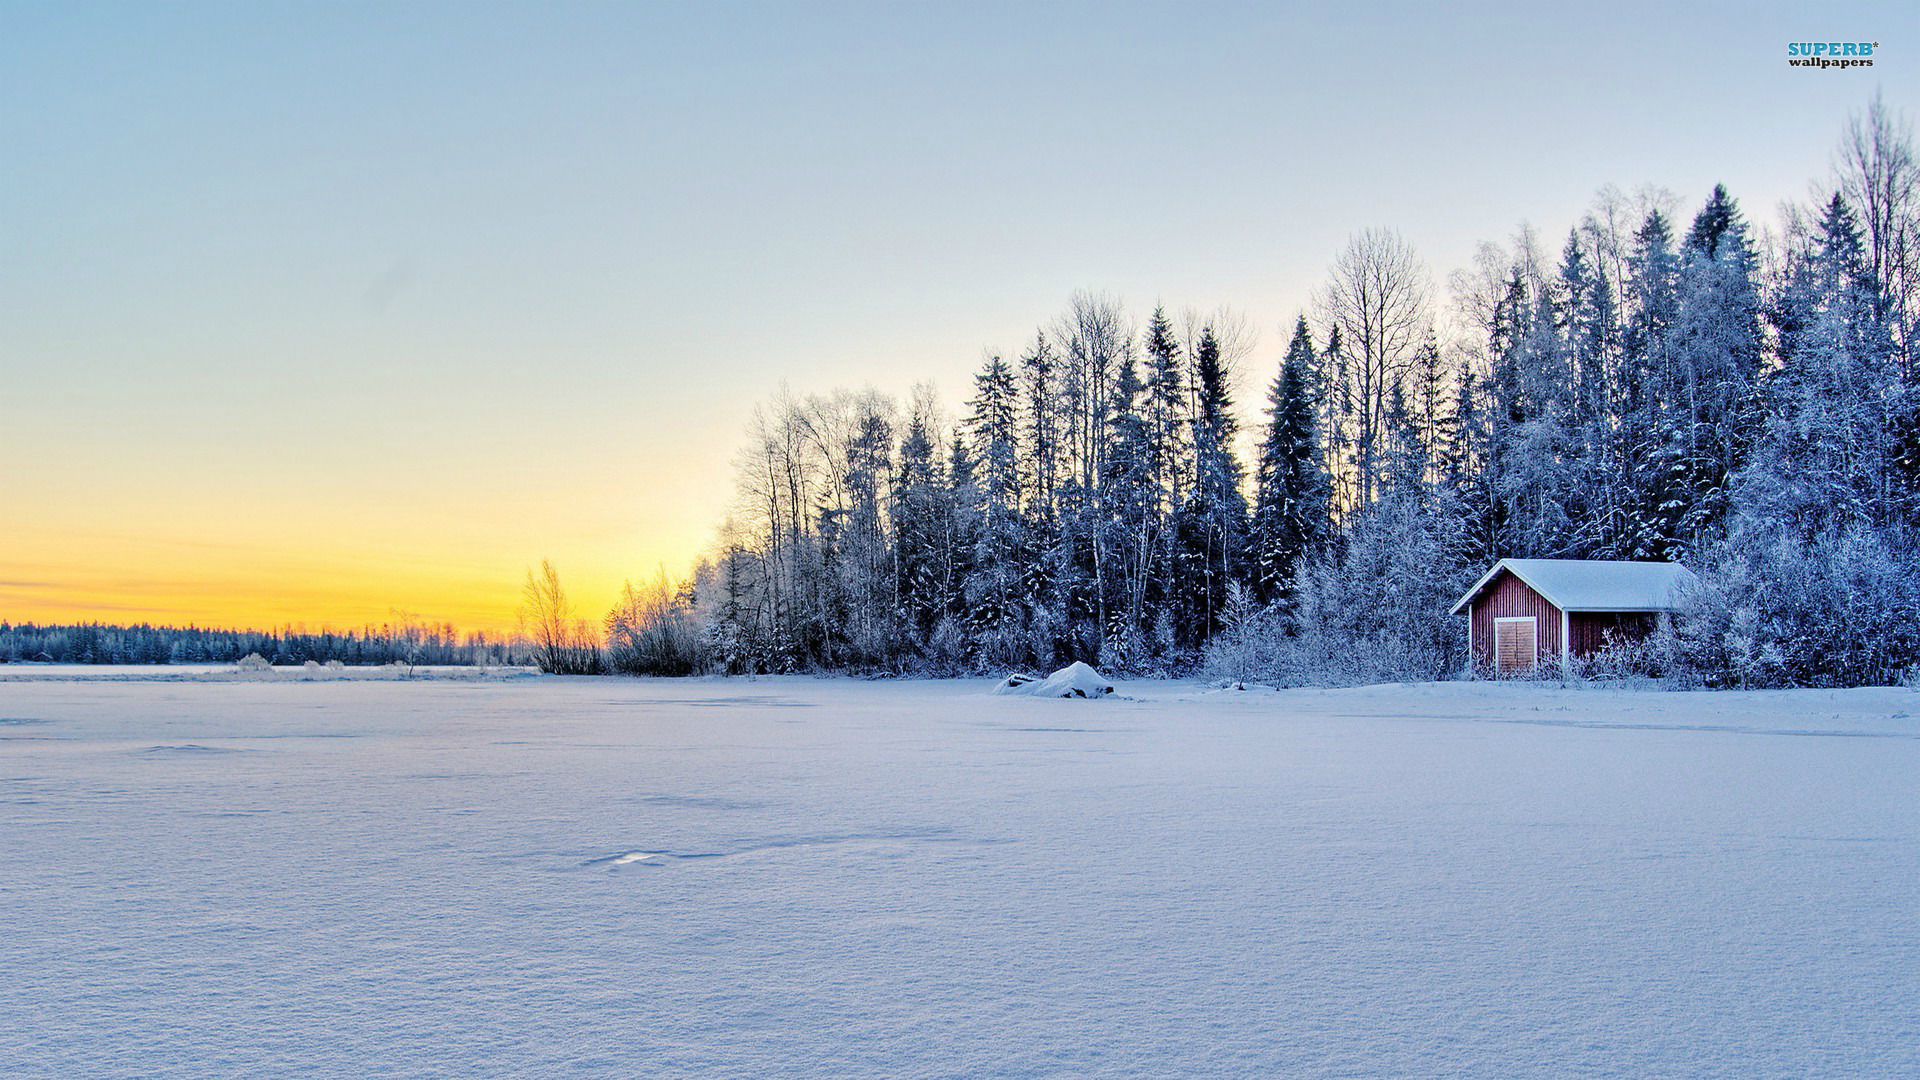 Картинки по запросу winter landscape | art | Pinterest | Landscaping ...